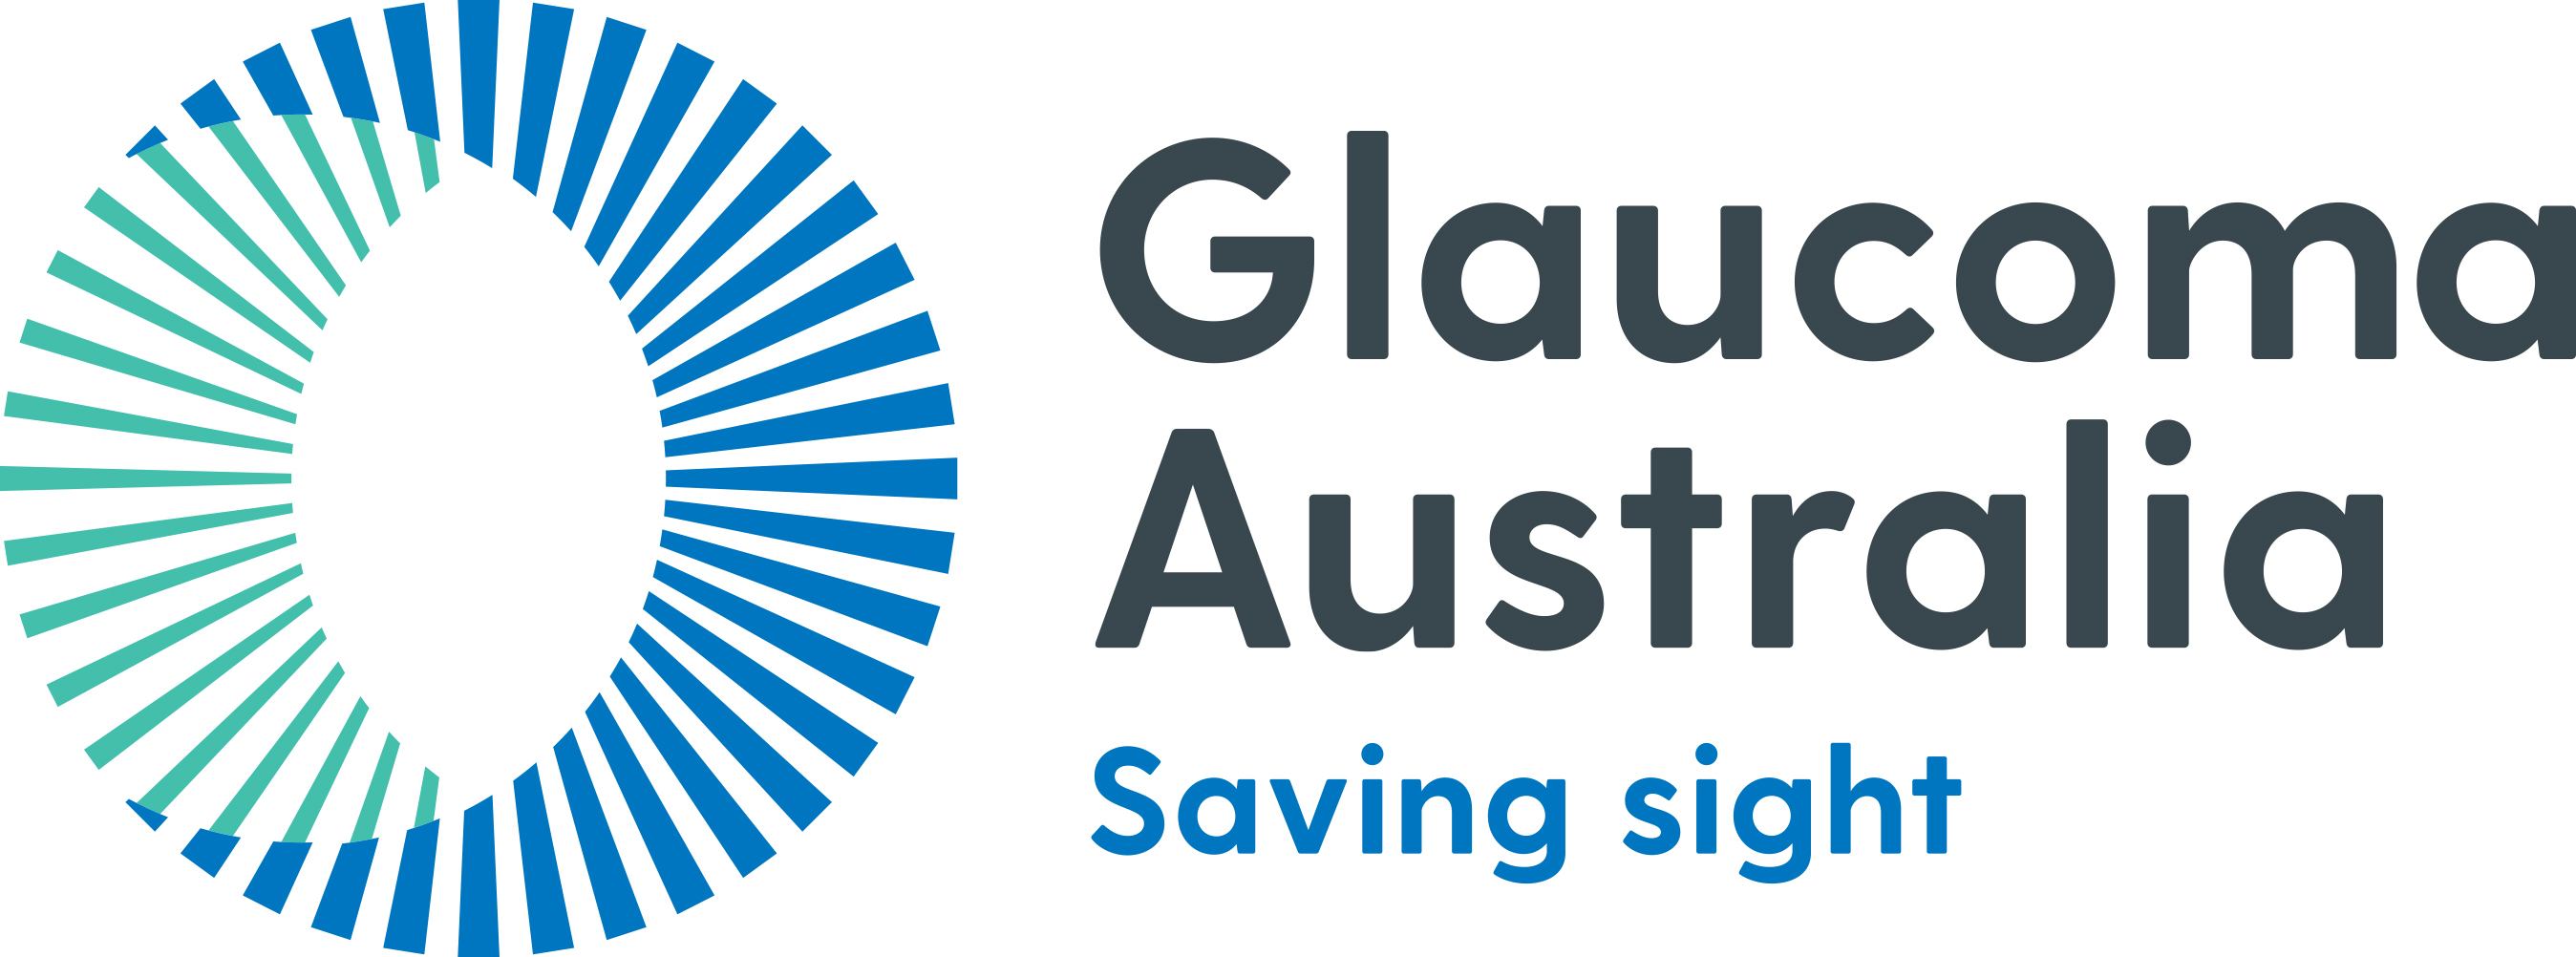 Glaucoma Australia logo